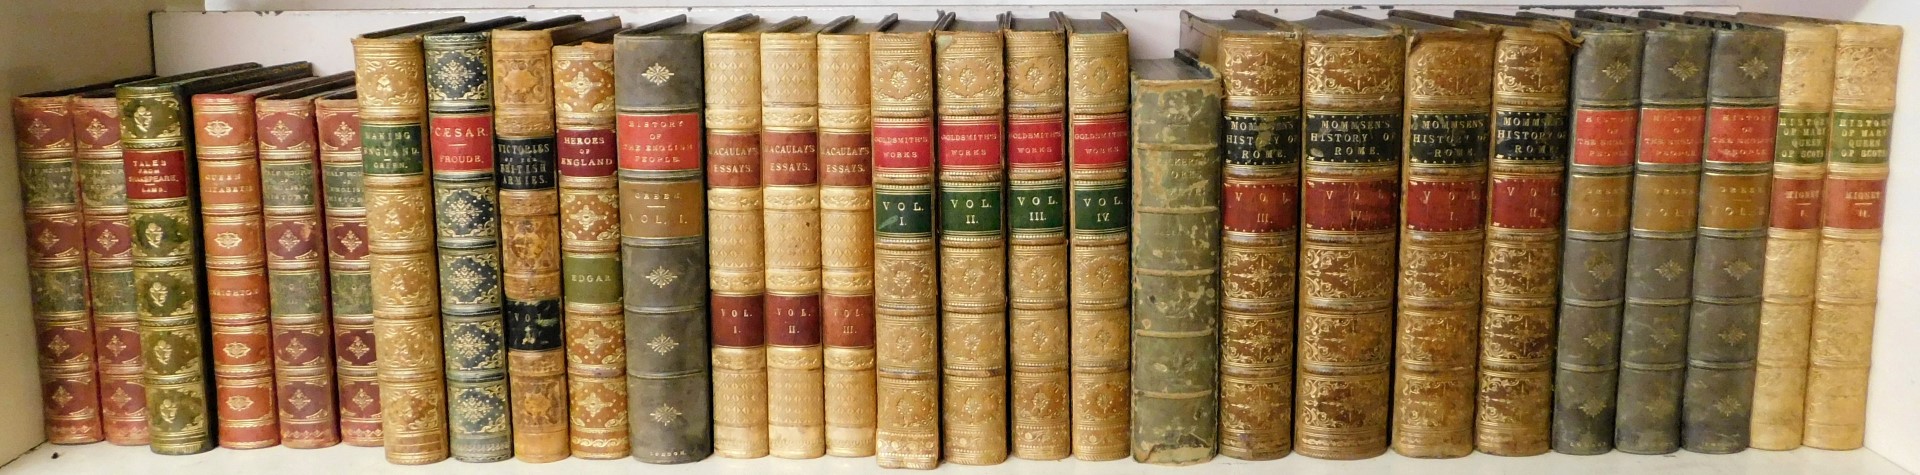 Bindings. Macaulay's Essays three vols, Goldsmith's Works four vols, Mommsen's History of Rome four